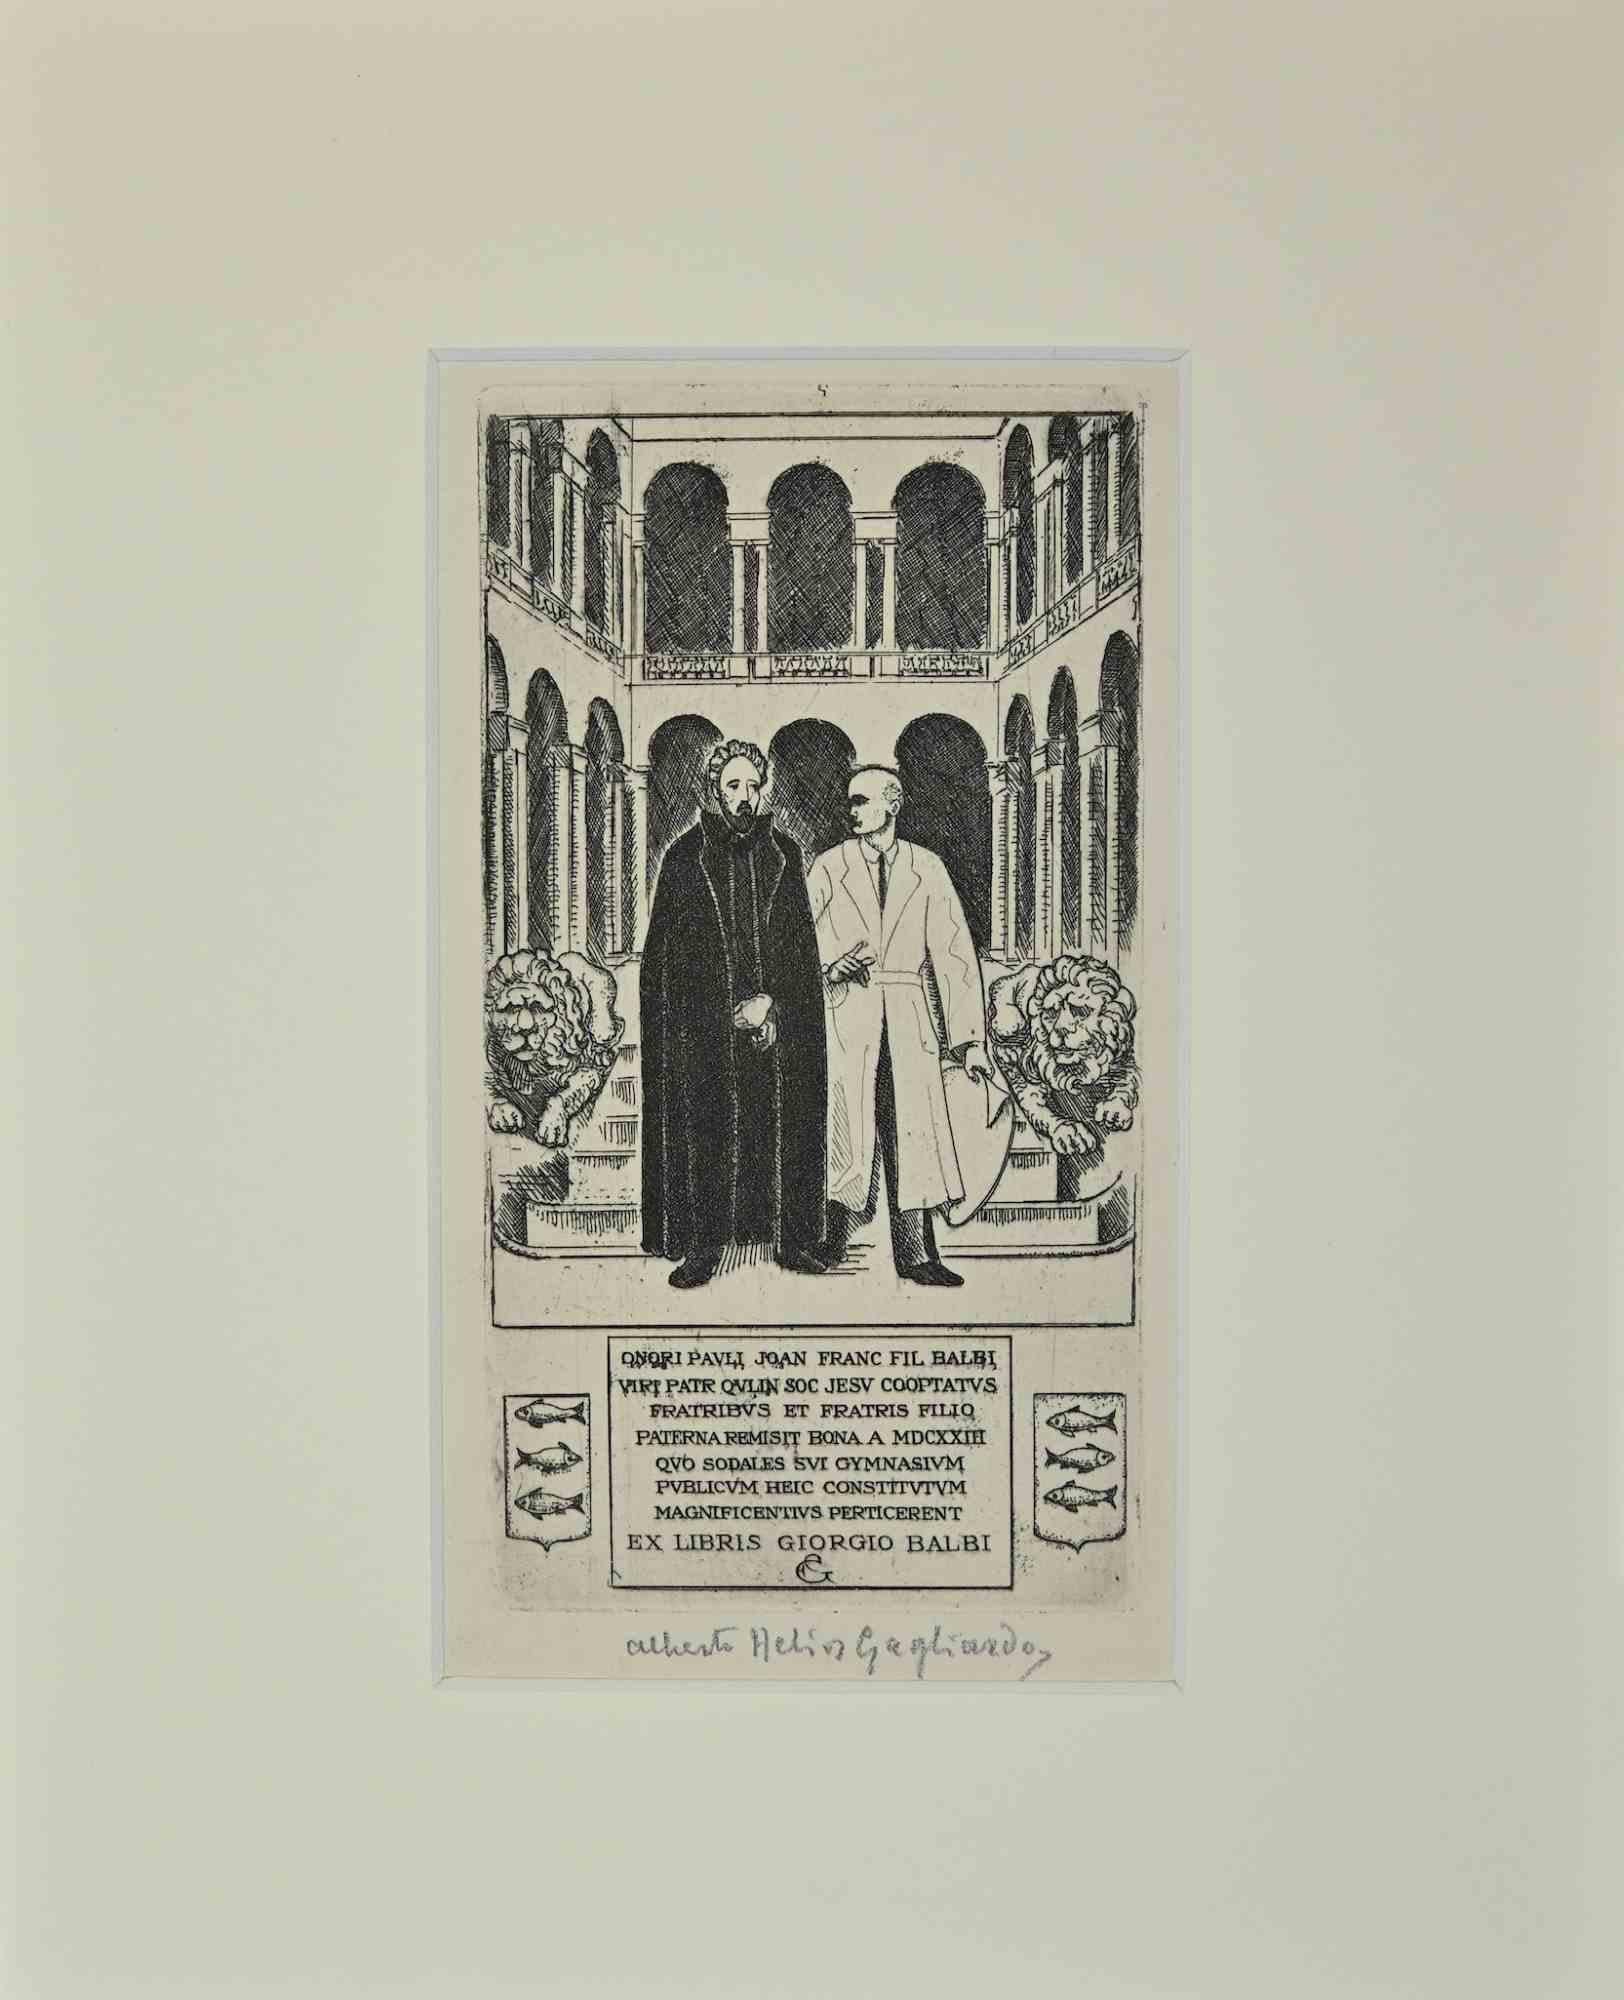 Figurative Print  Alberto Helios Gagliardo - Ex Libris  -  Fil. Balbi  par A. H. Gagliardo - Gravure  - Milieu du 20e siècle